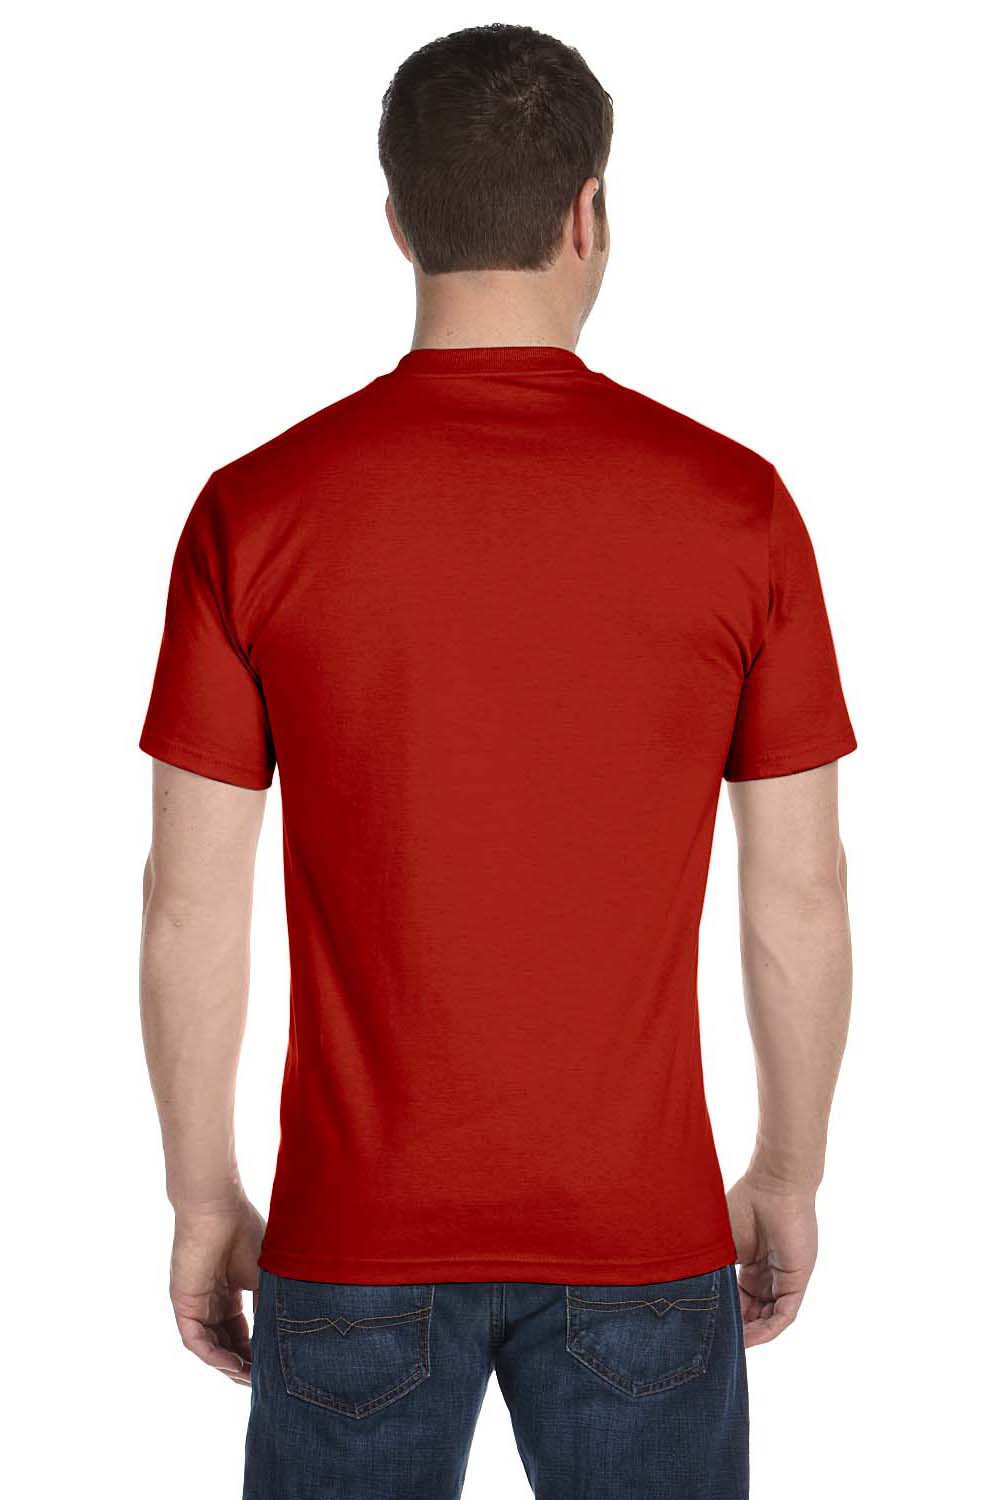 Hanes 5180 Mens Beefy-T Short Sleeve Crewneck T-Shirt Red Back